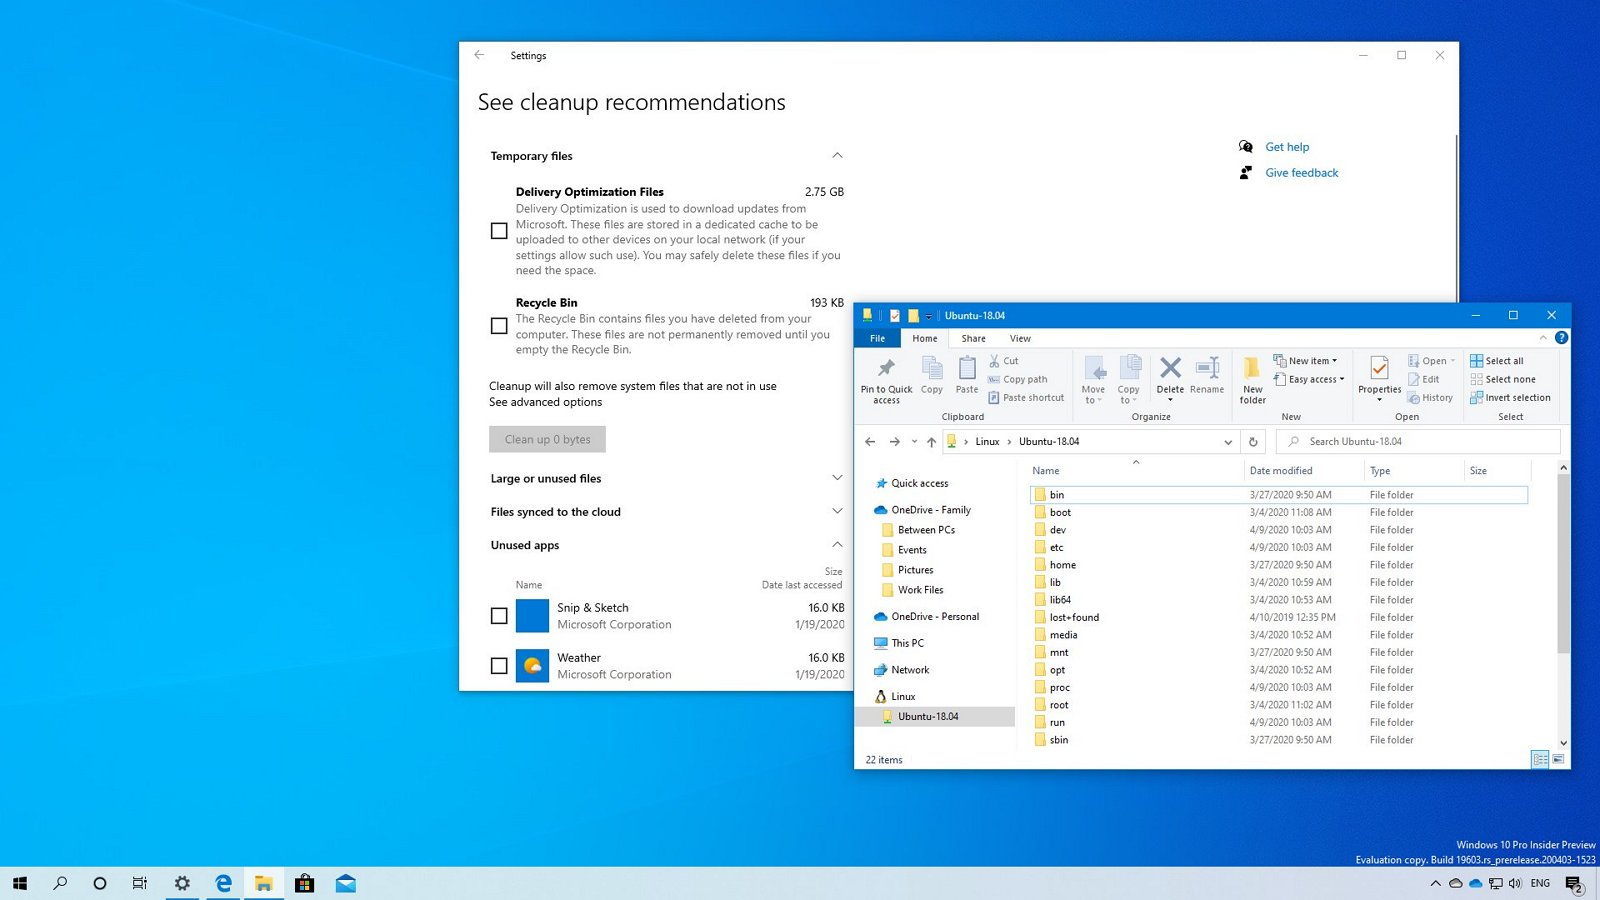 Windows 10 build 19603 Linux File Explorer integration